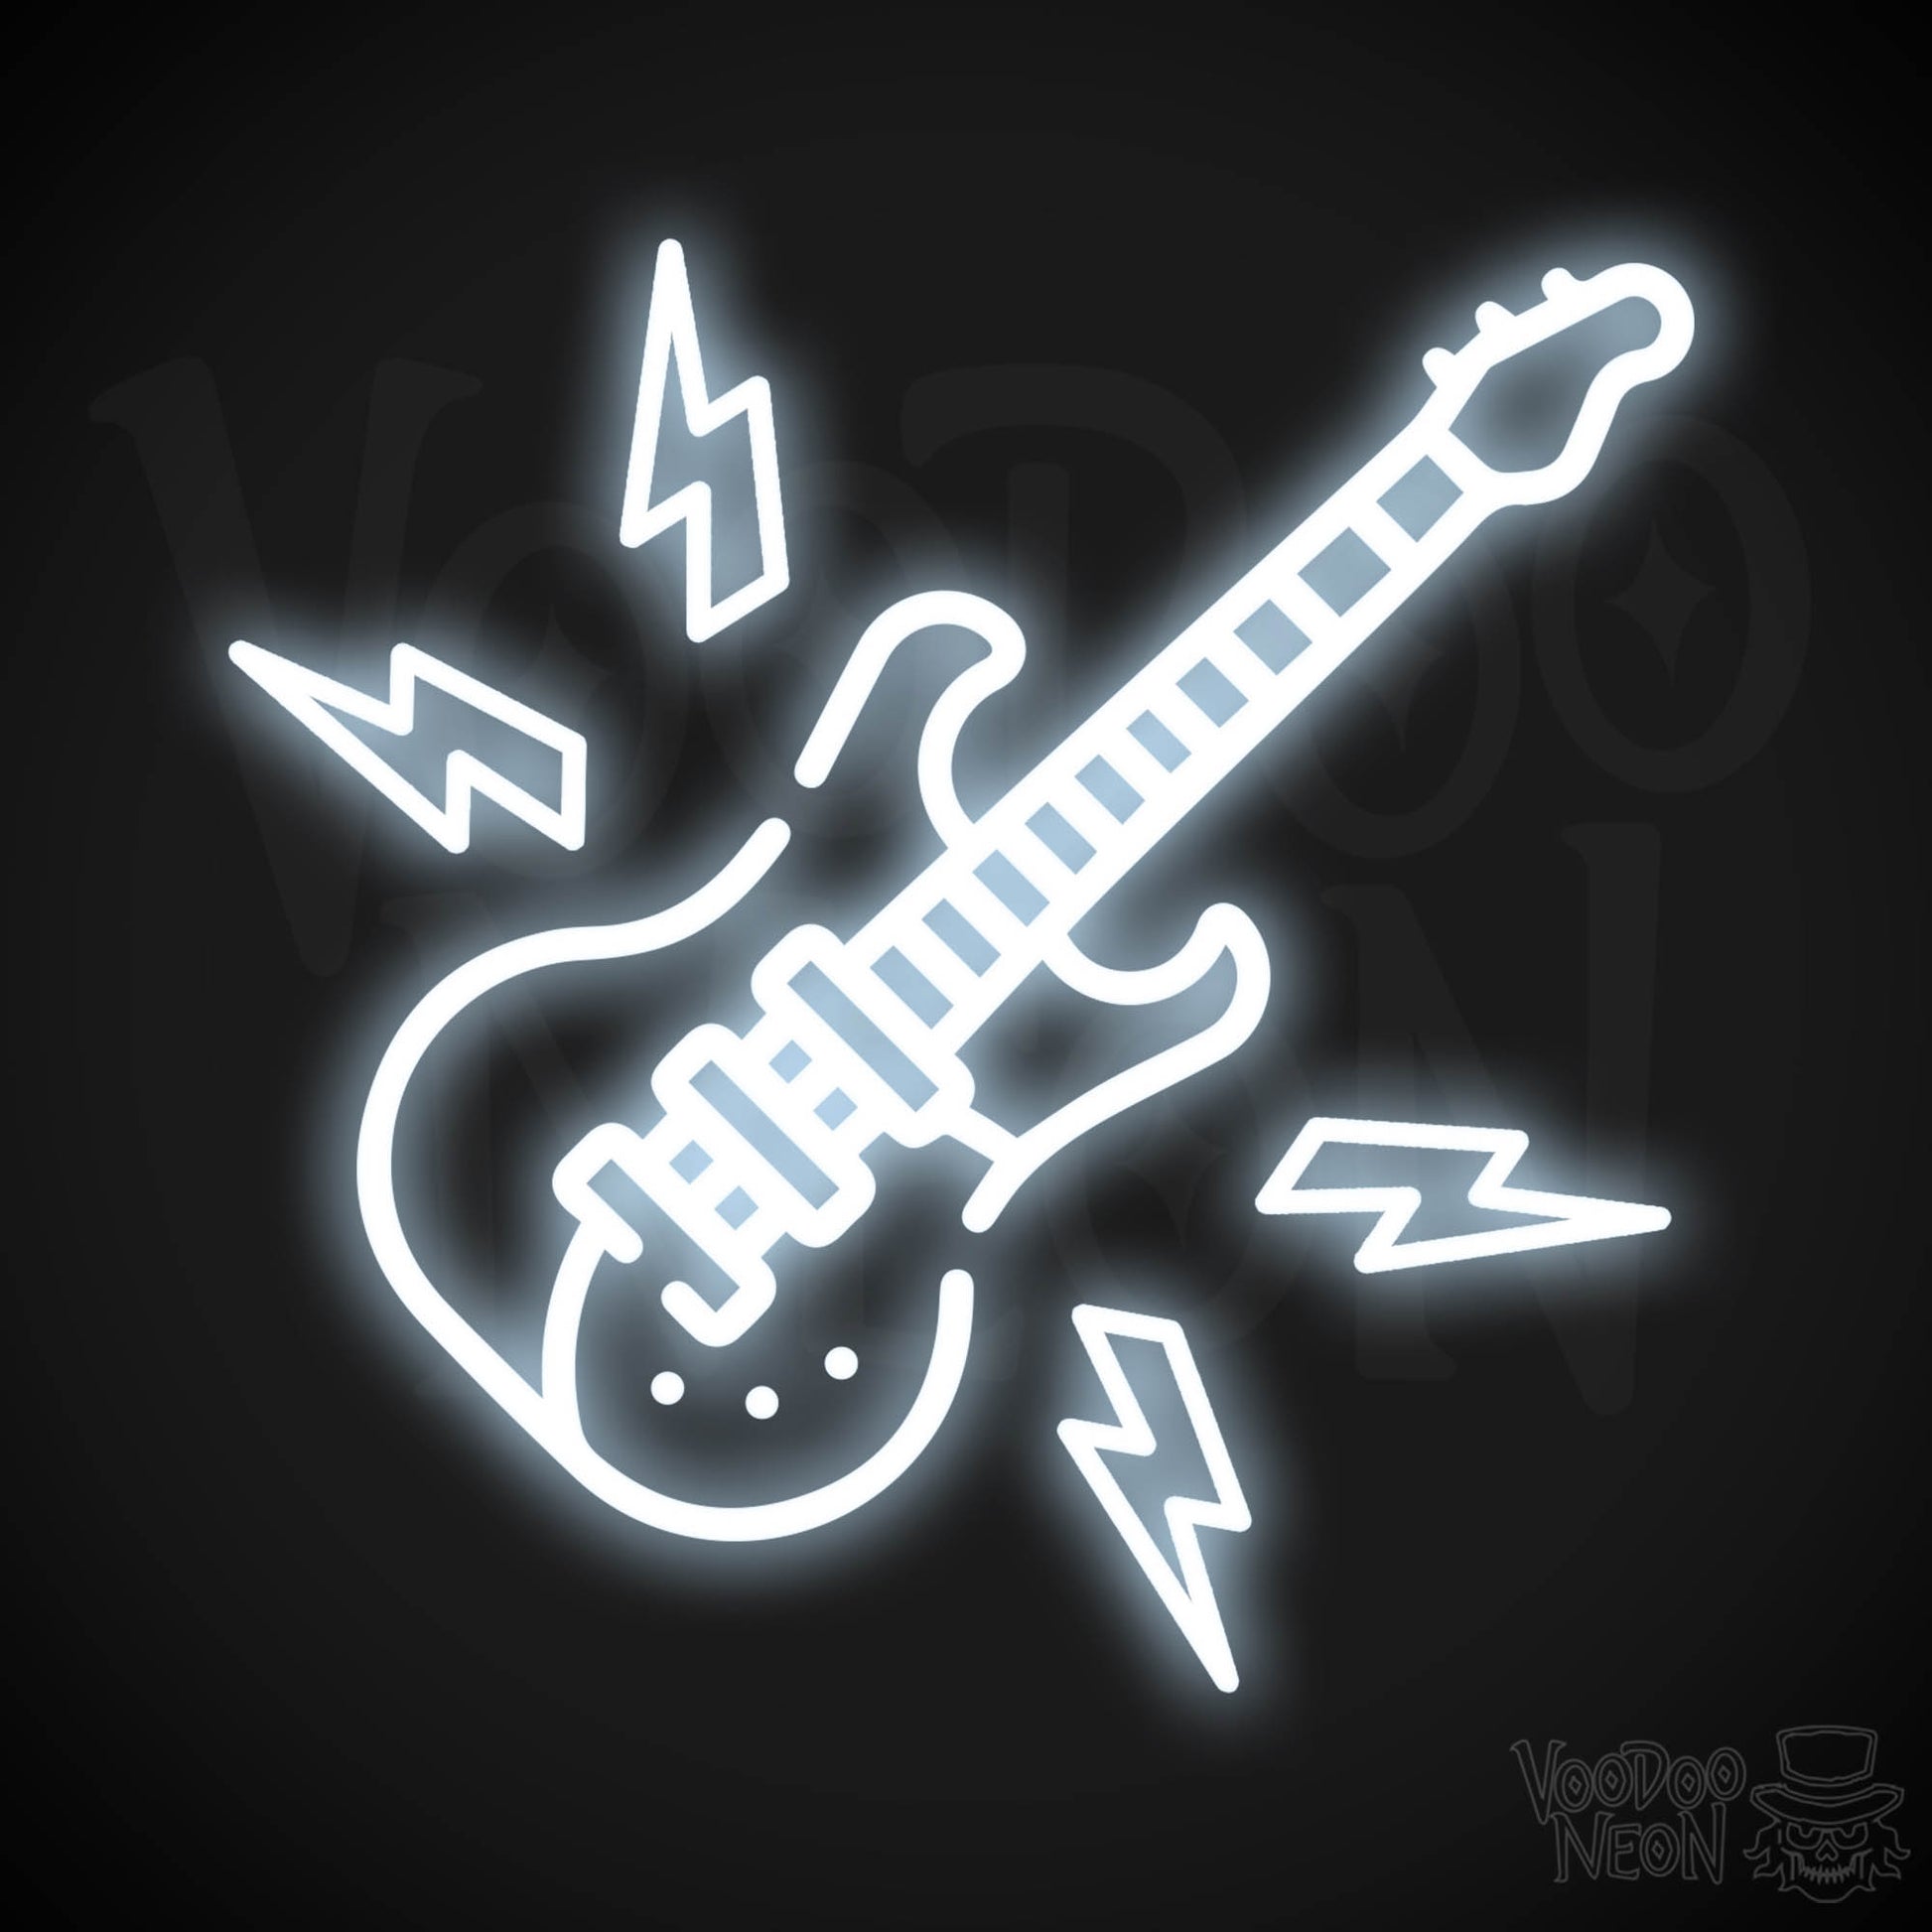 Neon Electric Guitar Sign - Electric Guitar Neon Sign - Electric Guitar Neon Wall Art - Color Cool White